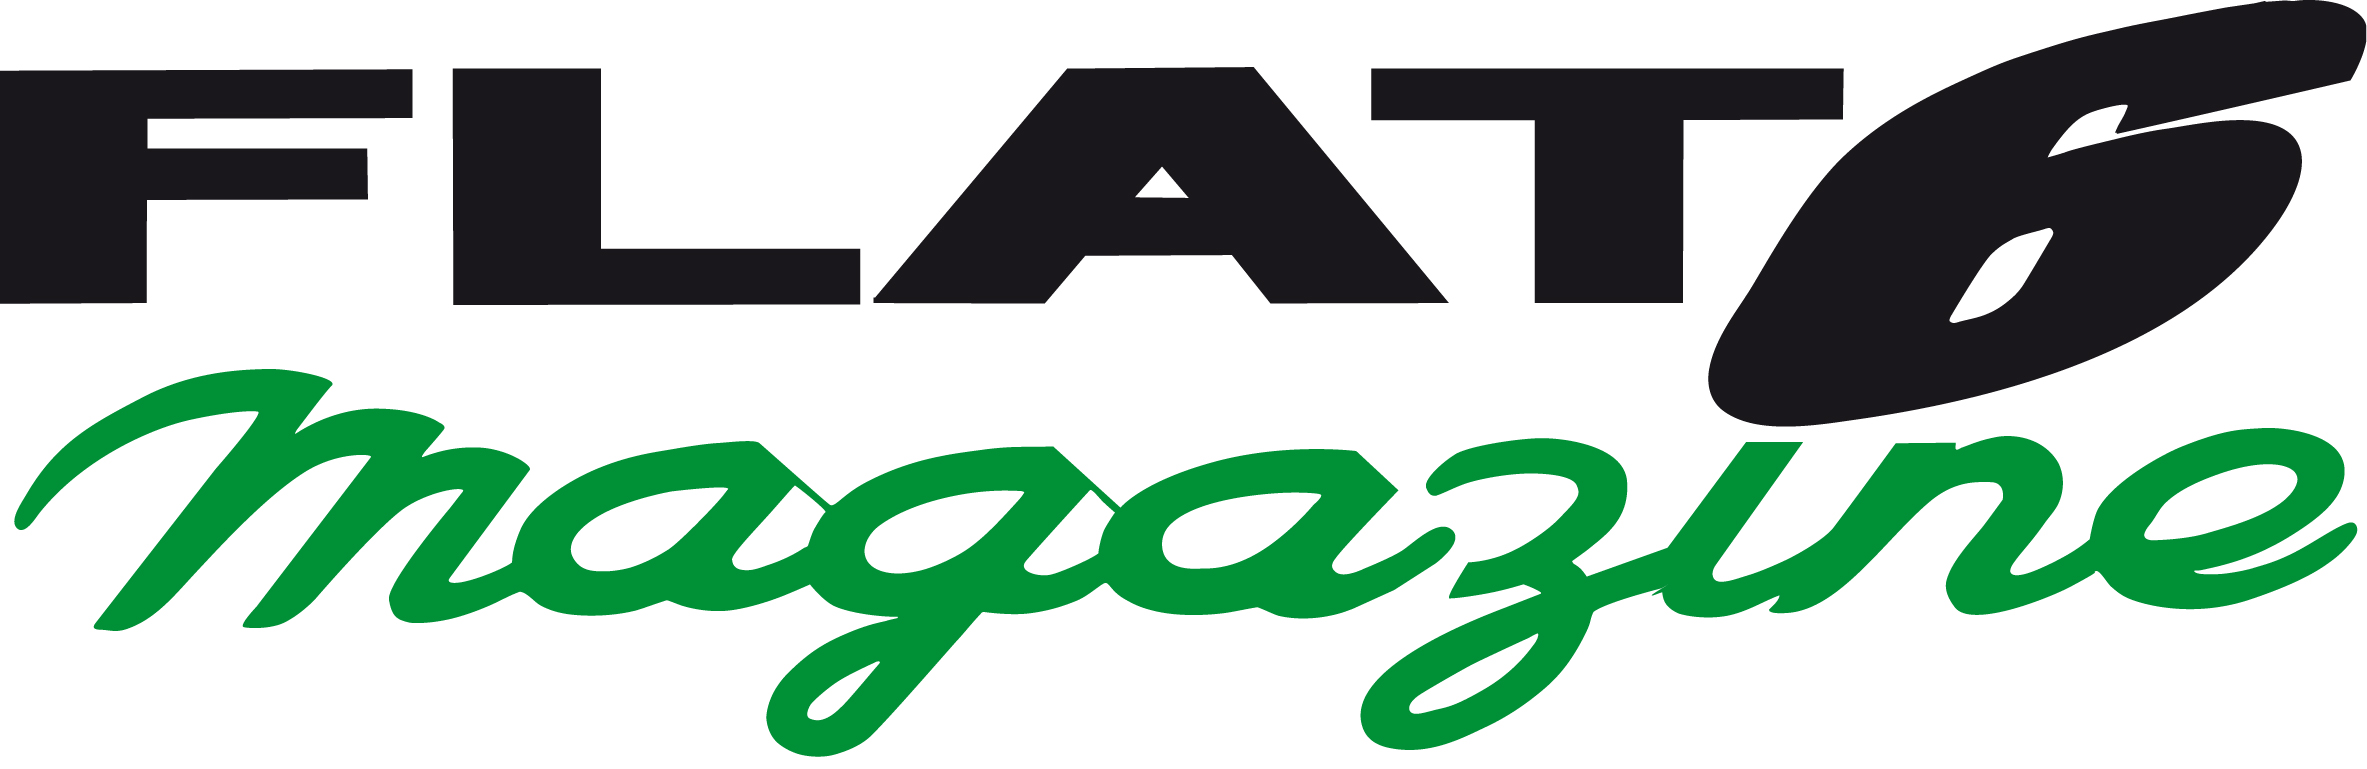 logo flat6